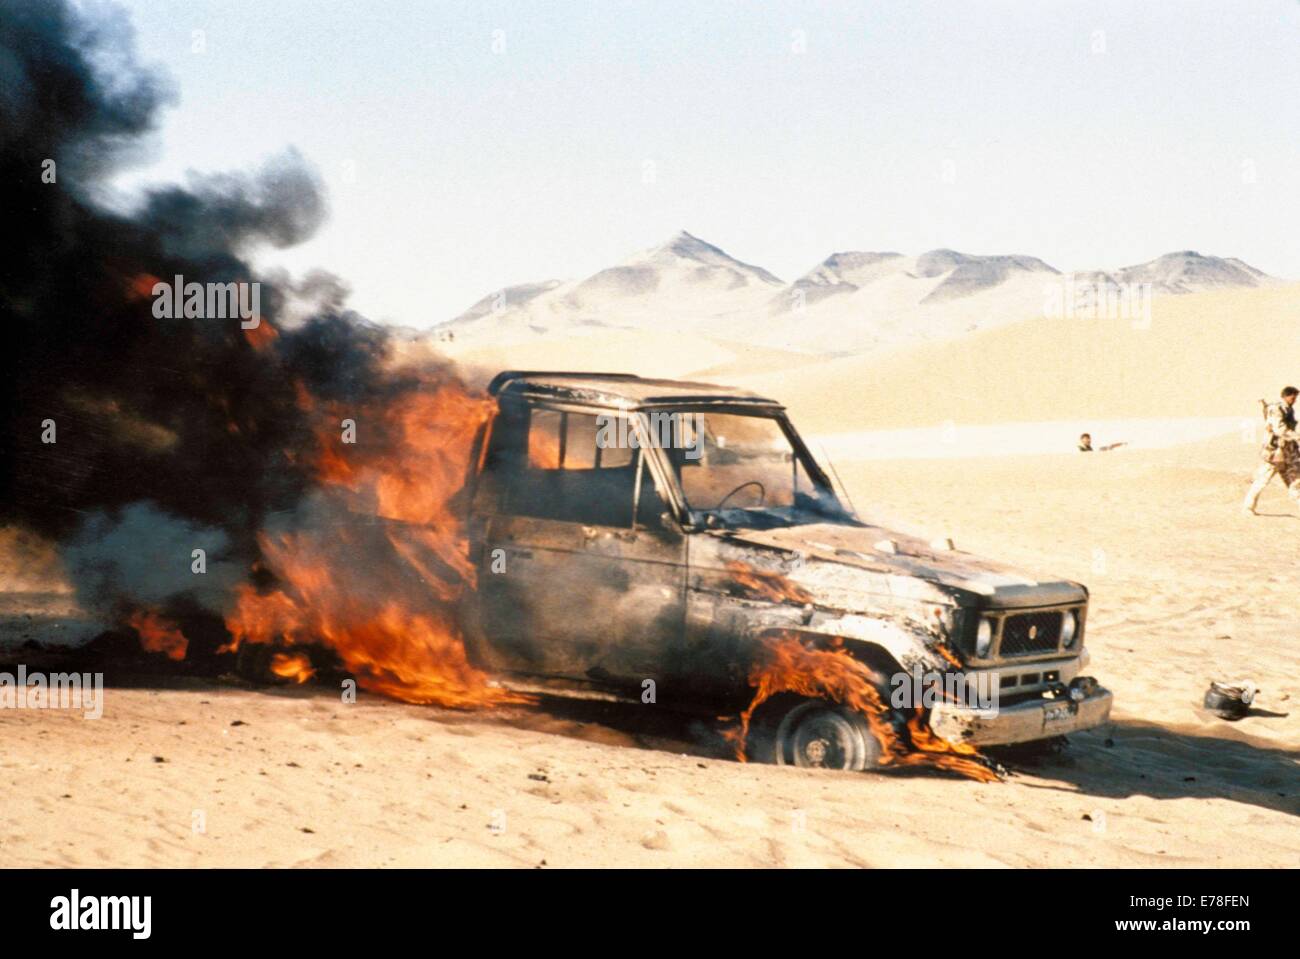 Drug traffickers' vehicle hit by rocket launcher along PAKISTAN-AFGANISTAN border, Koh-e-Sultan - Pakistan. Stock Photo